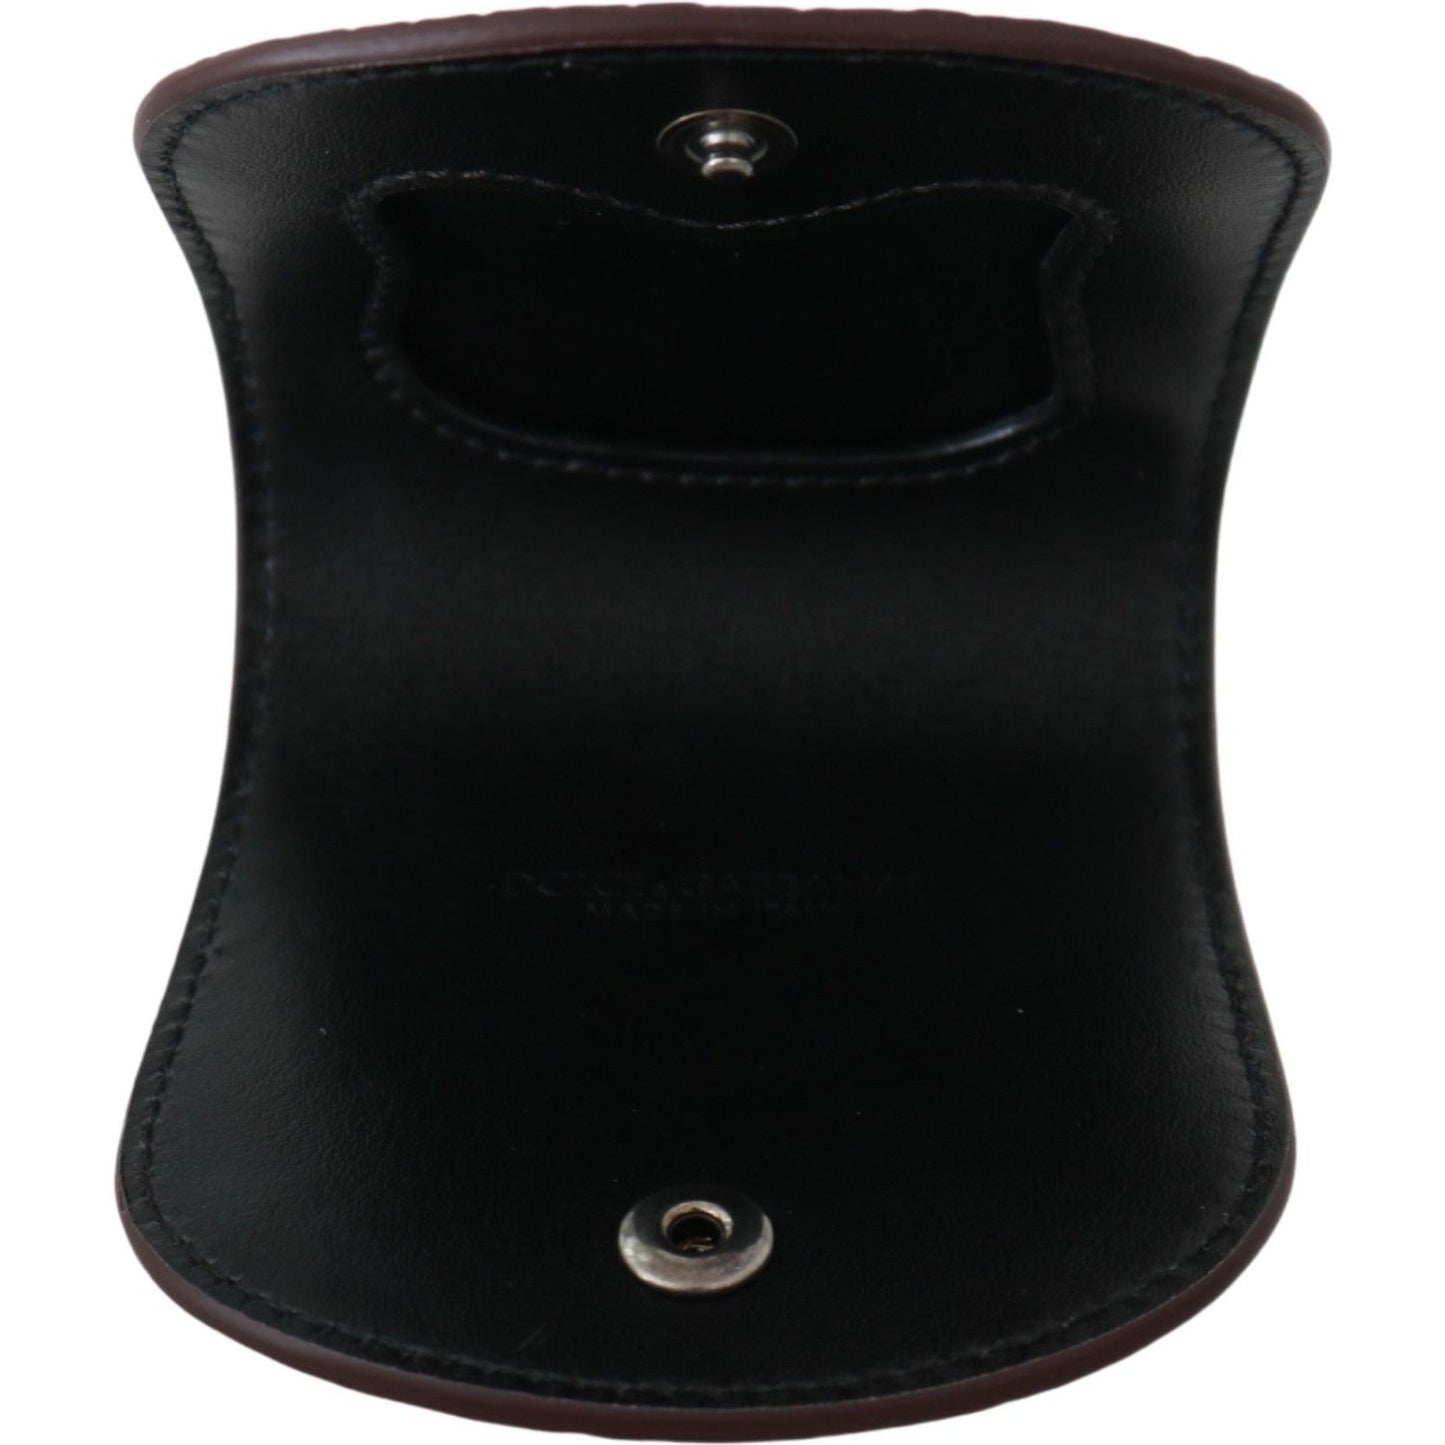 Dolce & Gabbana Refined Caimano Leather Coin Case brown-exotic-skin-pocket-condom-case-holder Condom Case IMG_0260-f205e2c8-8d5.jpg